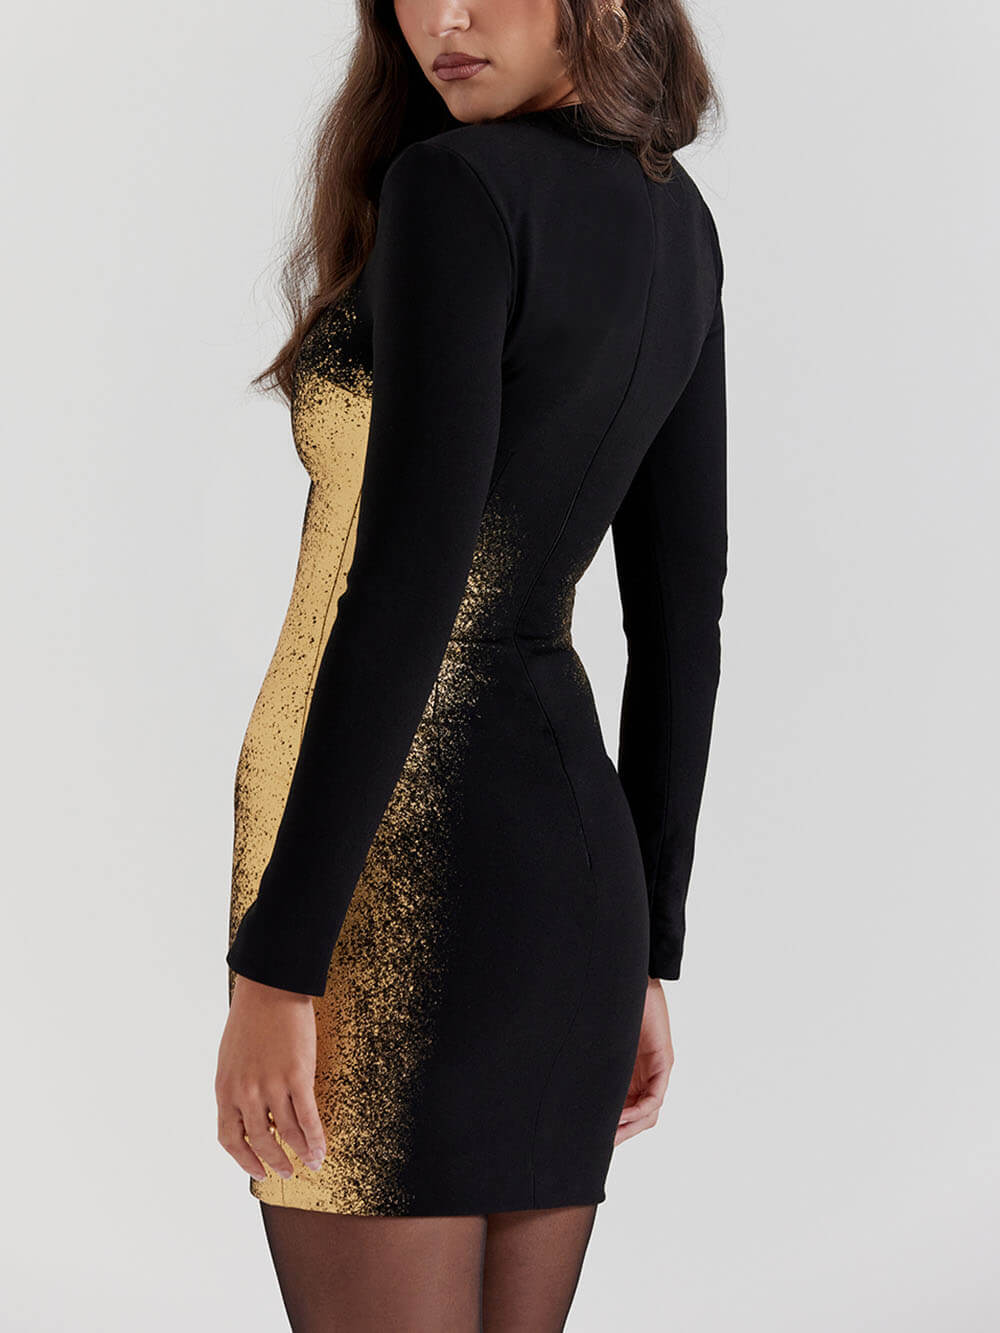 Black & Gold Foil Print Mini Dress